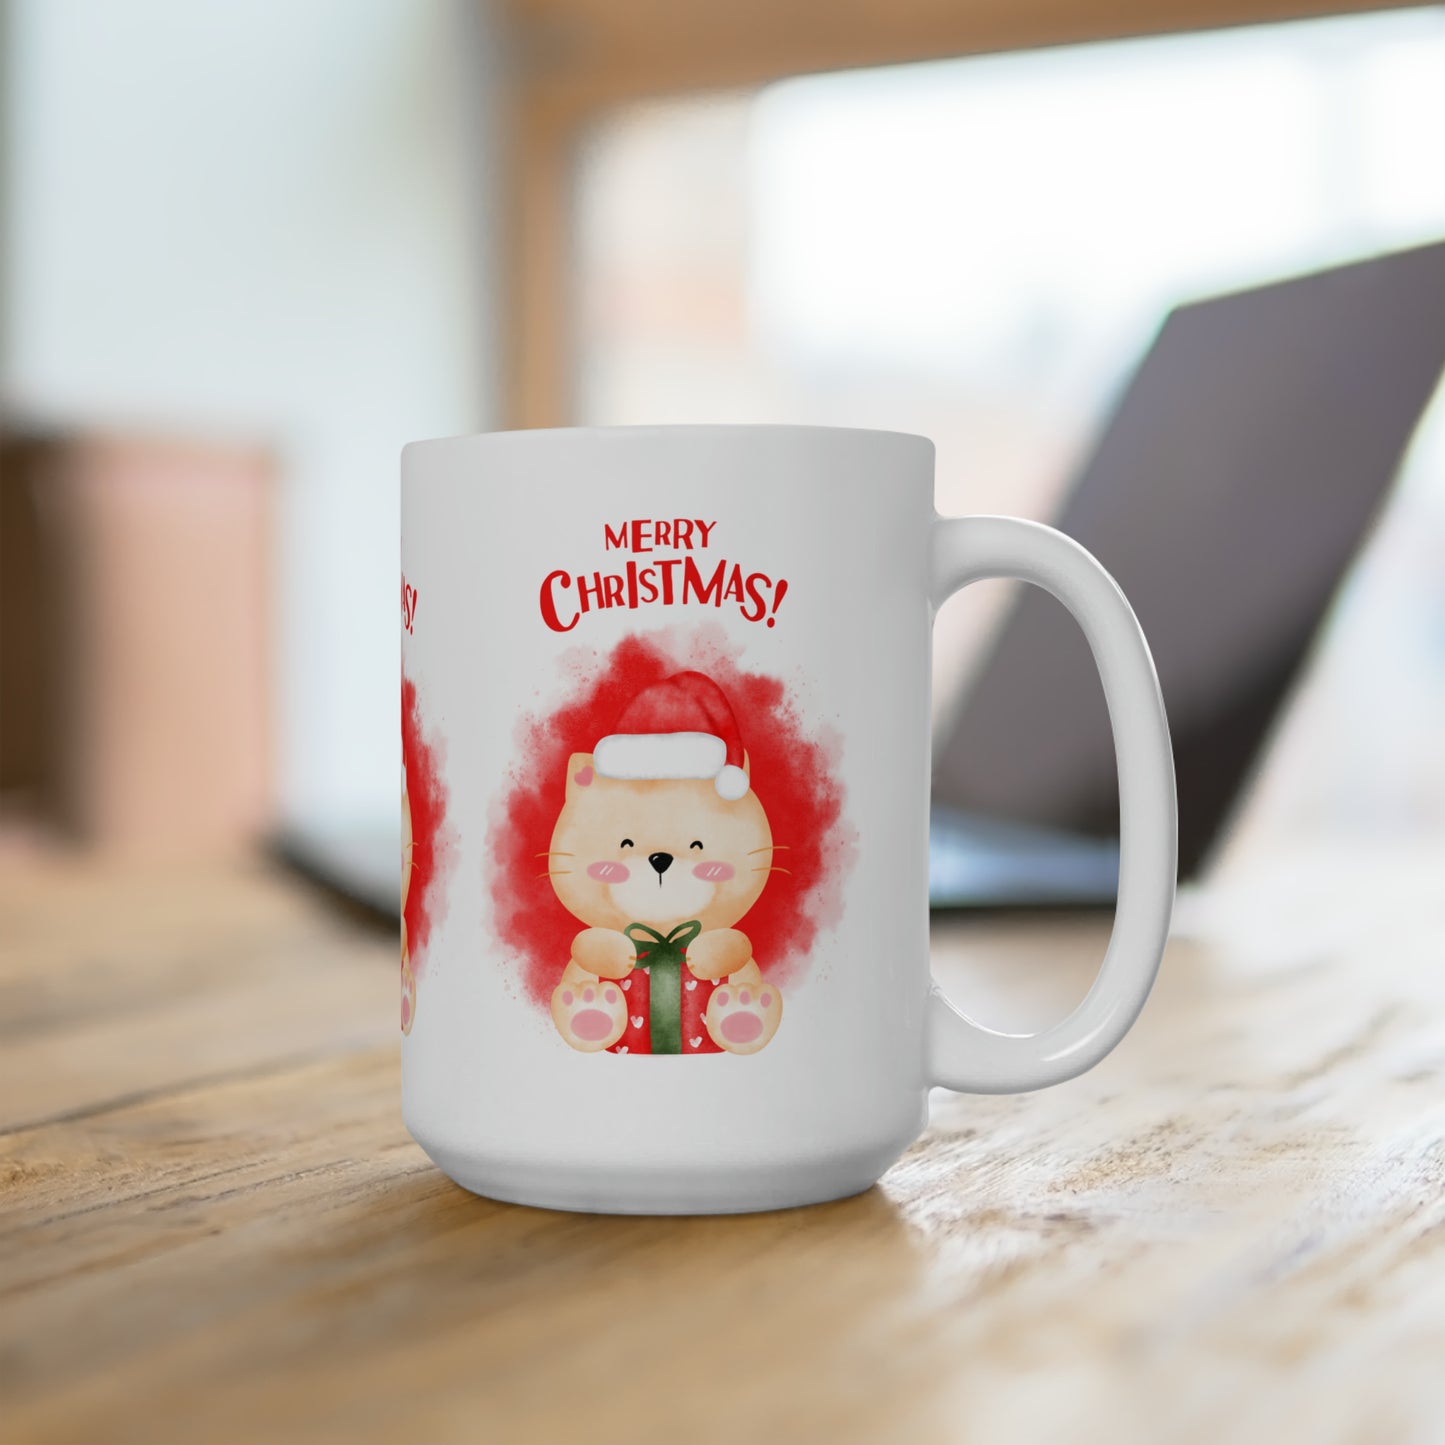 Merry Christmas with Teddy Printed Ceramic Mugs, 15oz